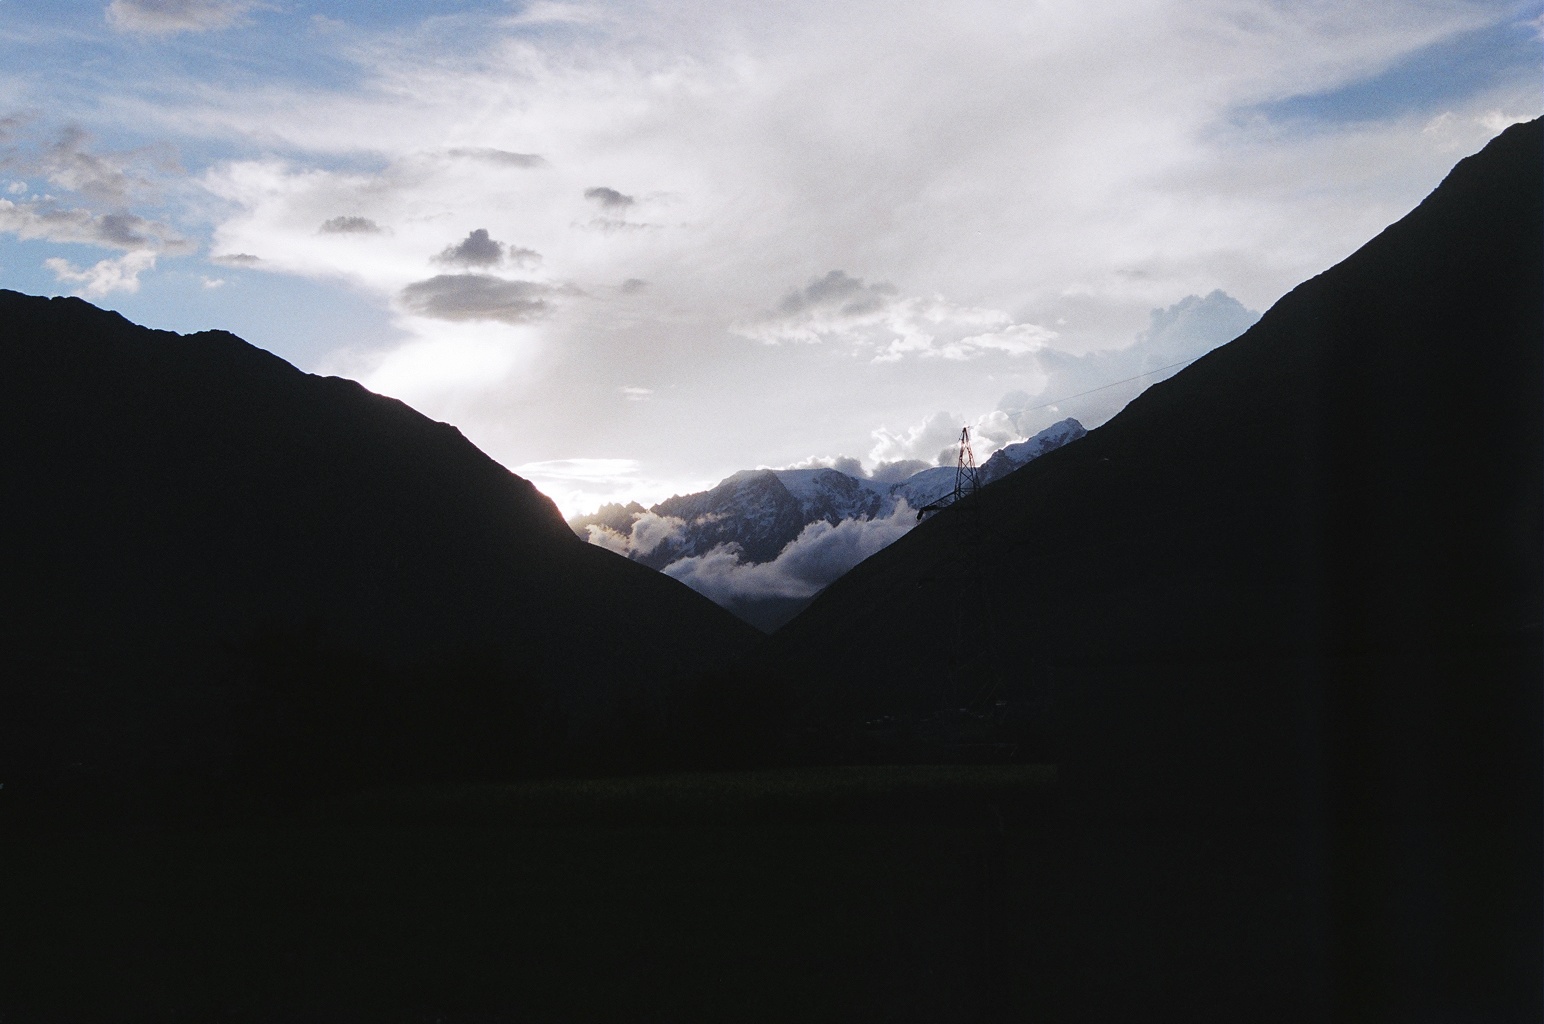   Ollantaytambo, Peru. &nbsp;35mm film, 2014. 